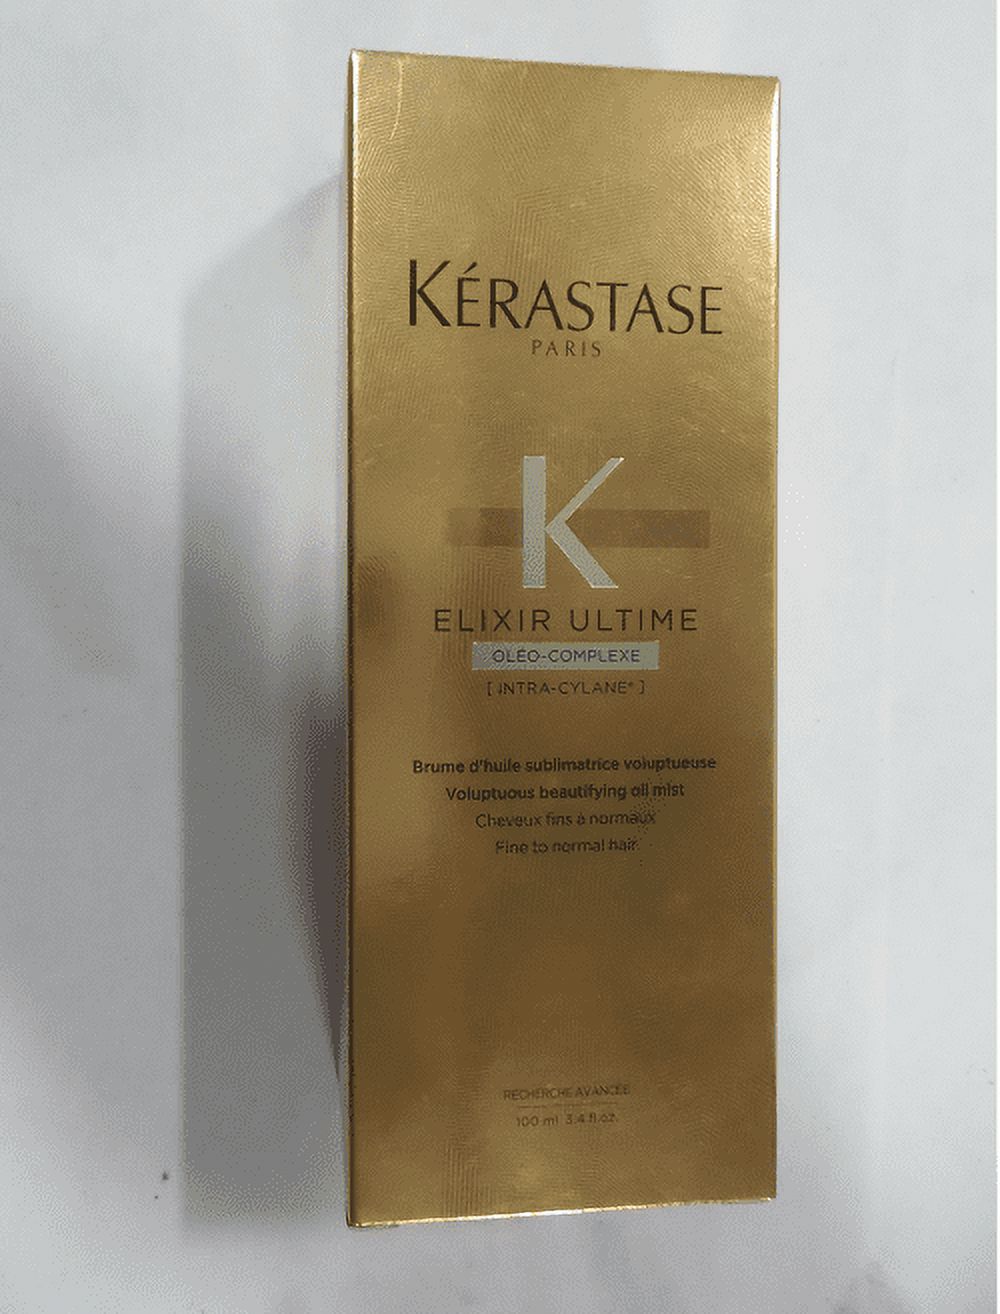 Kerastase Elixir Ultime Volume Beautifying Oil Mist 3.4 FL OZ - image 1 of 2